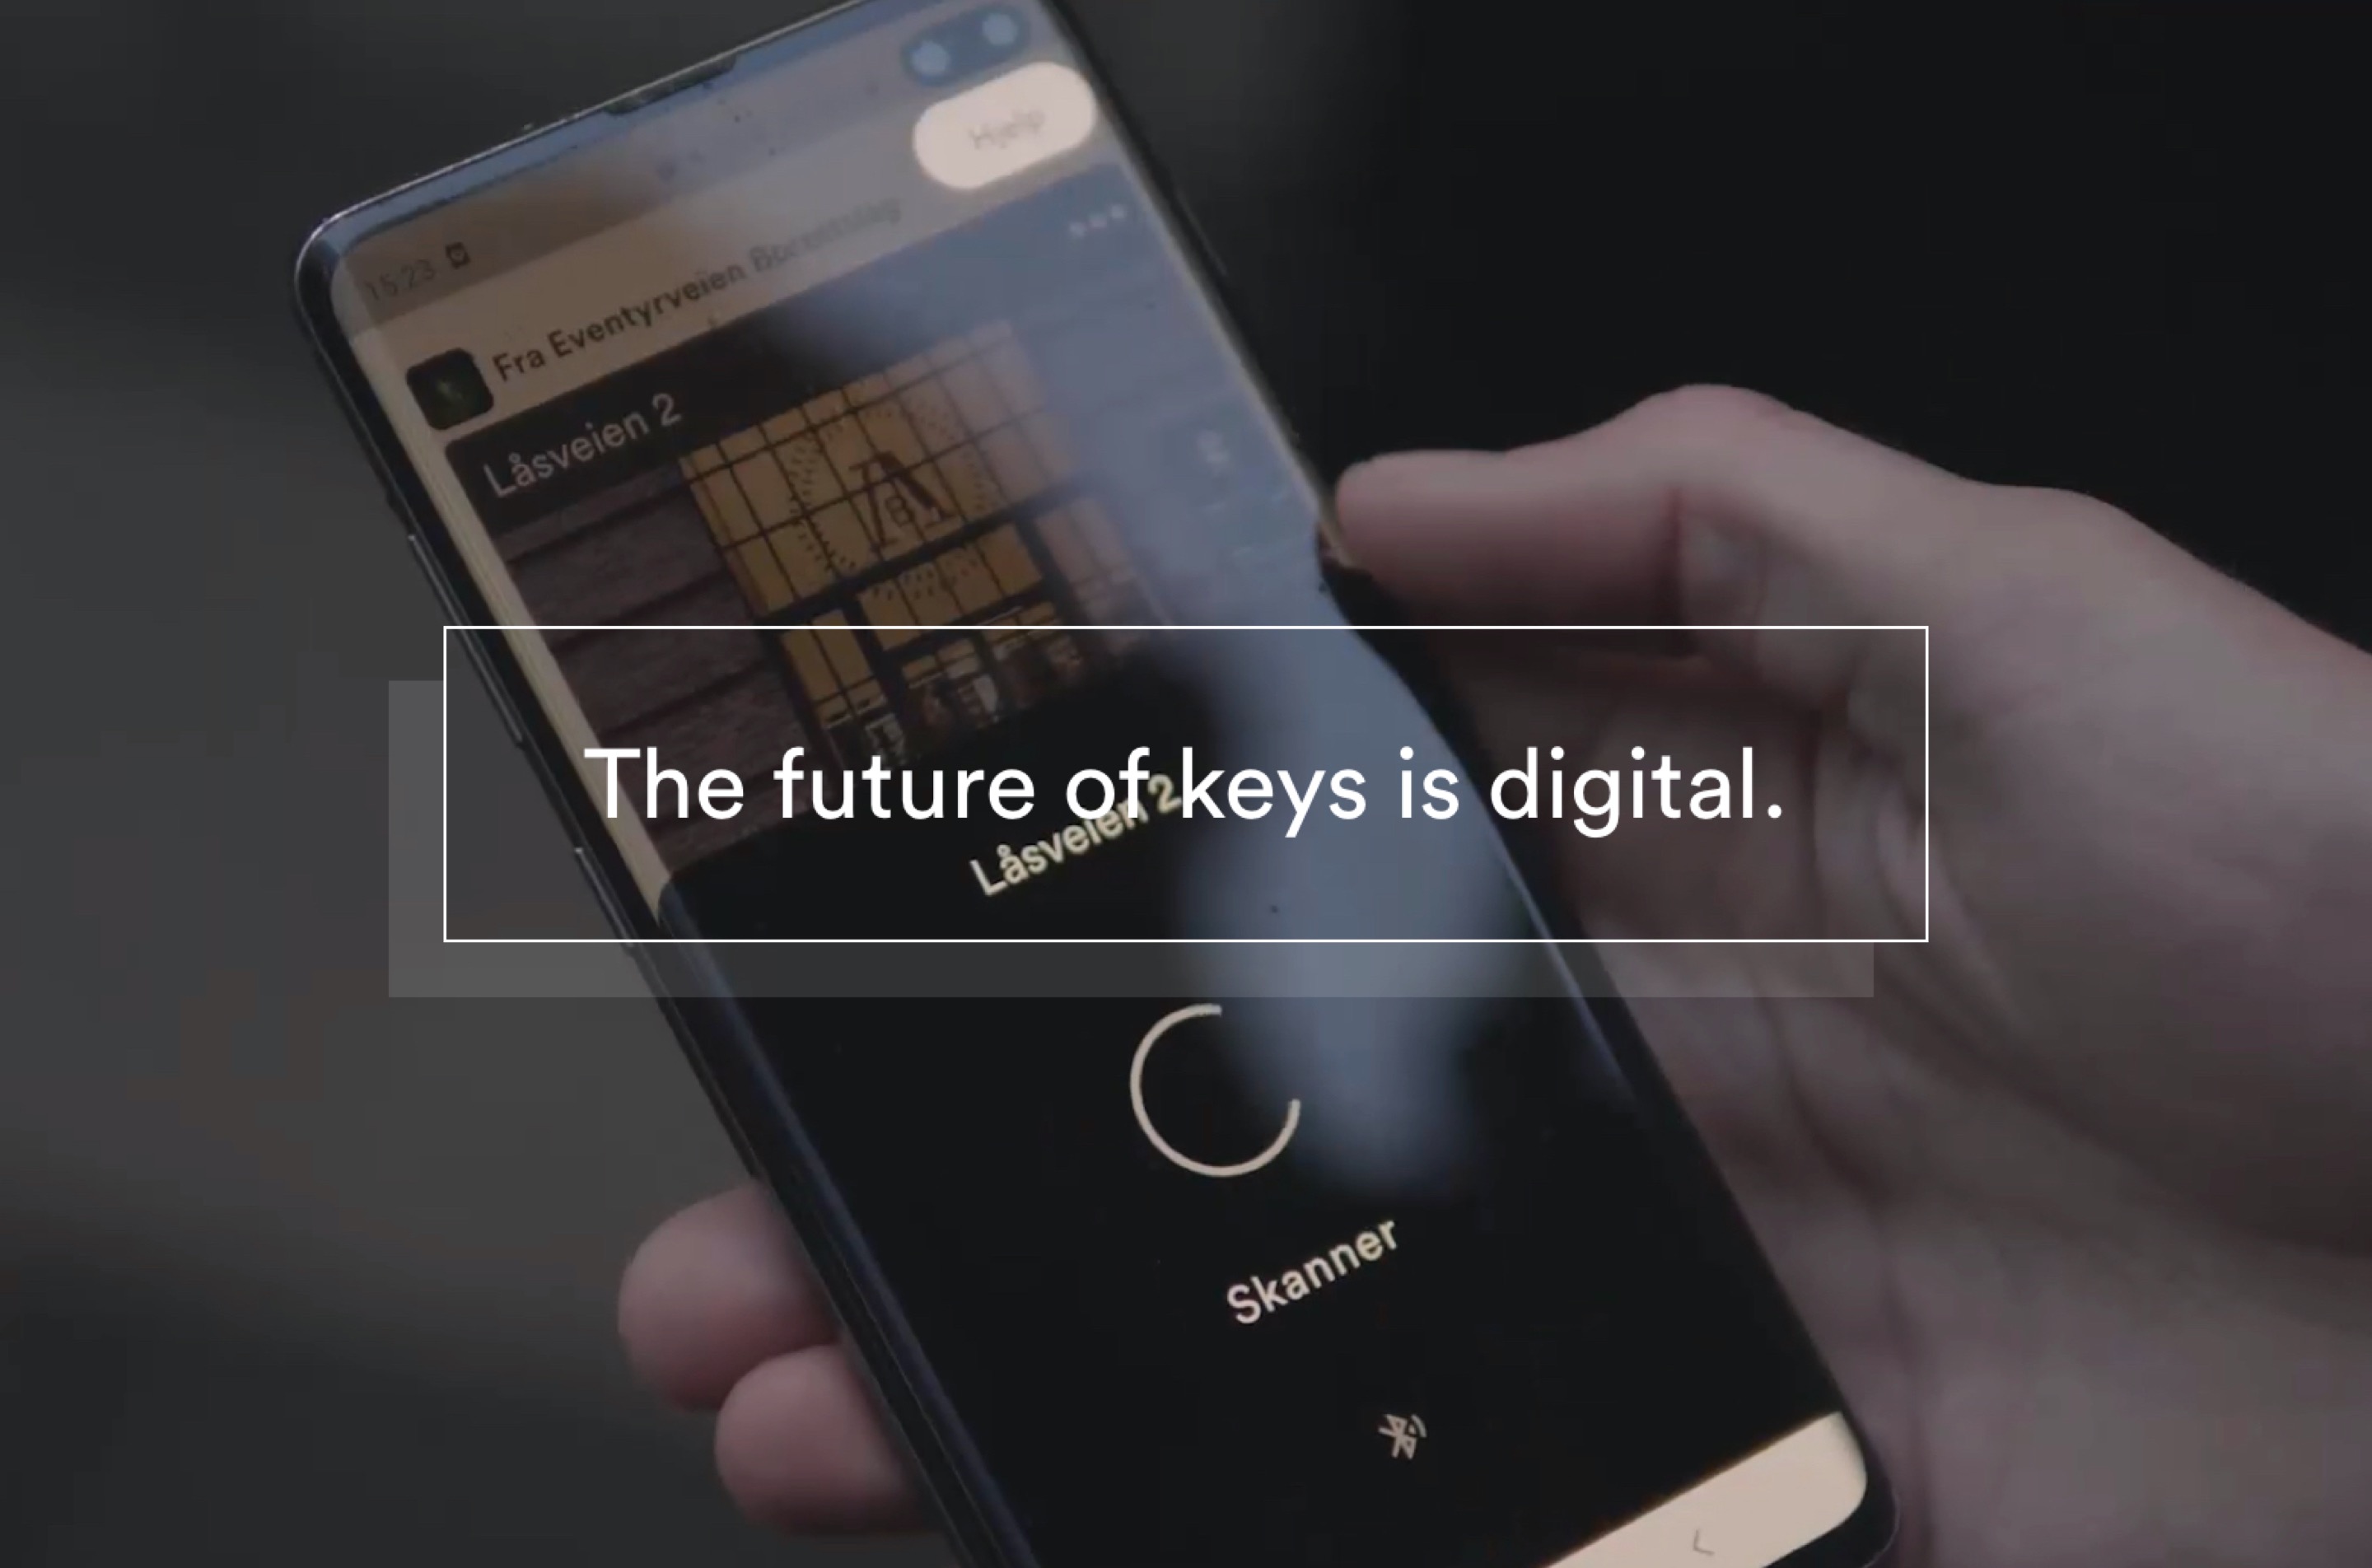 App screenshot proclaiming that the future of keys is digital